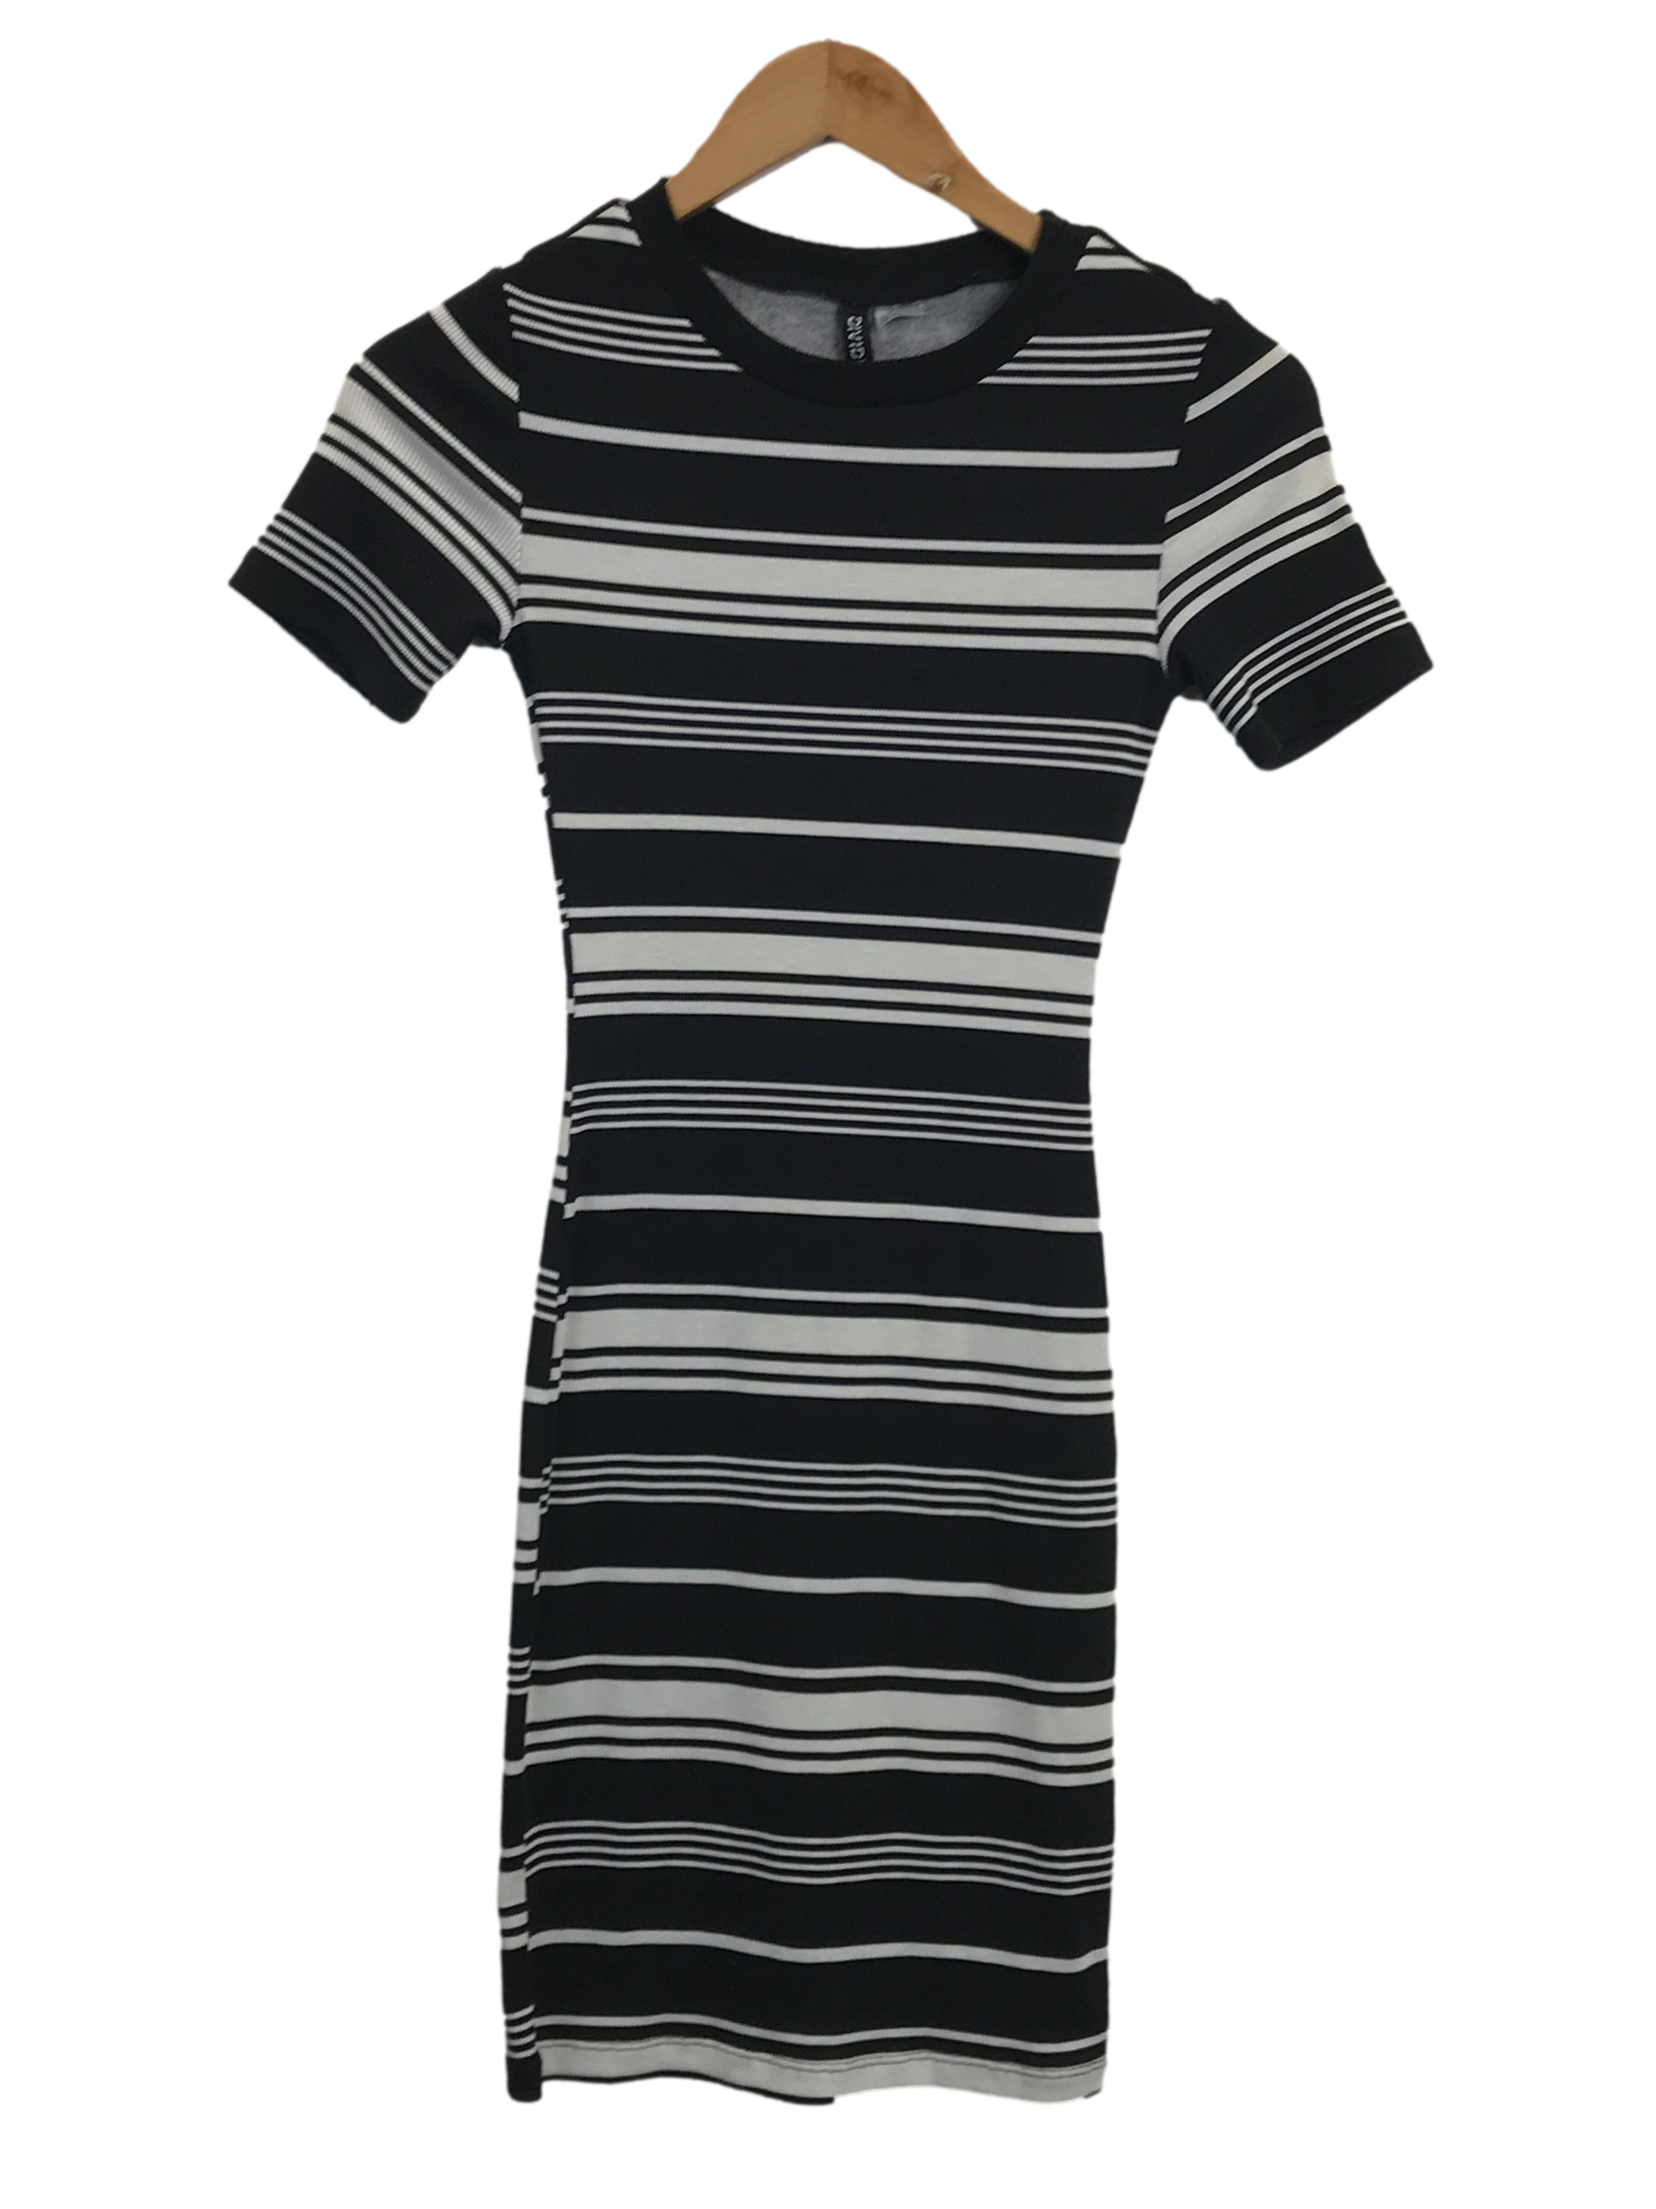 Black And White Horizontal Stripes Dress